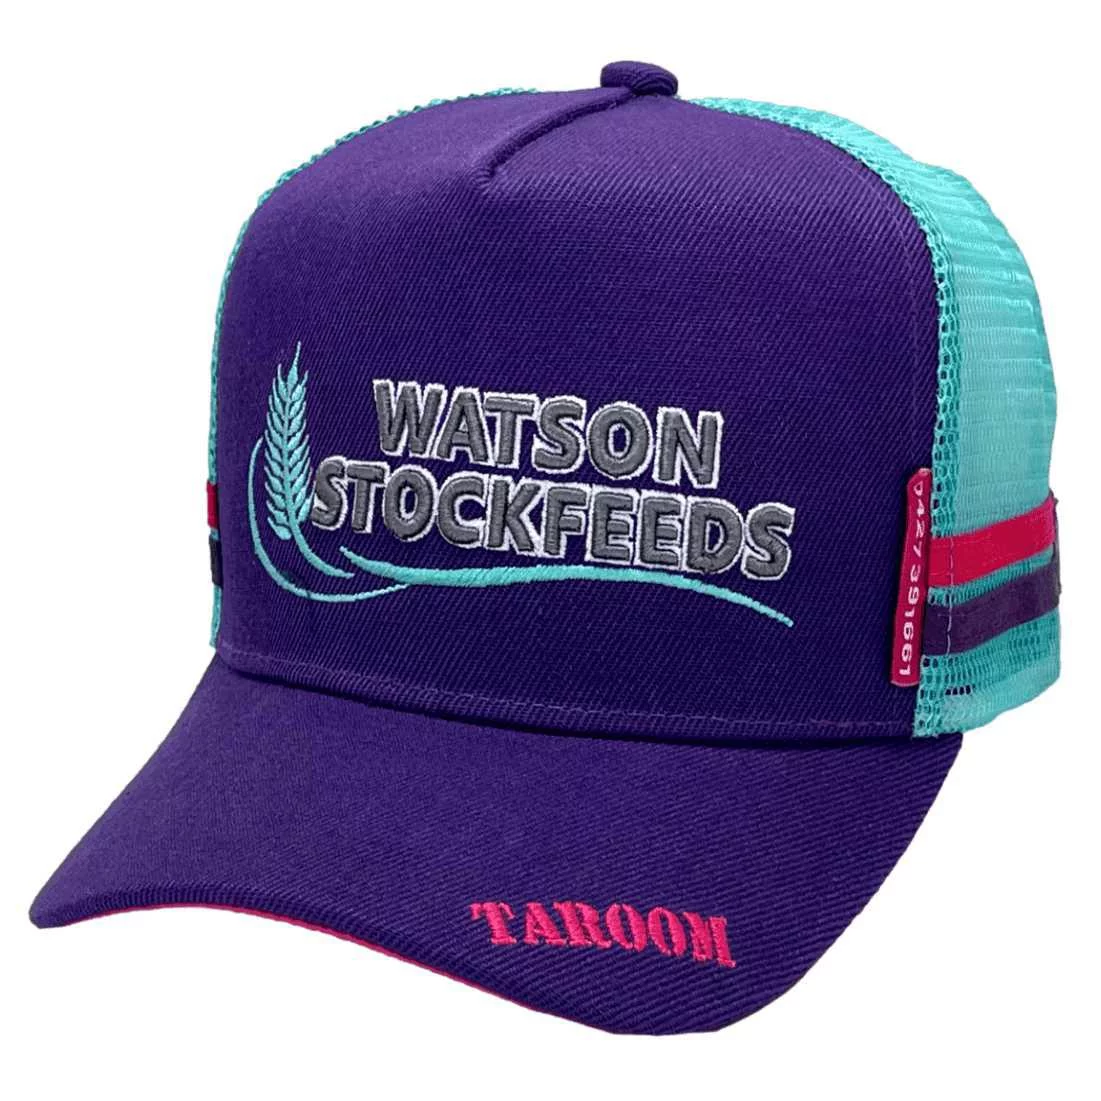 Watson Stockfeeds Taroom Qld HP Original Midrange Aussie Trucker Hat with Australian Head Fit Crown and Double Side Bands Purple Aqua